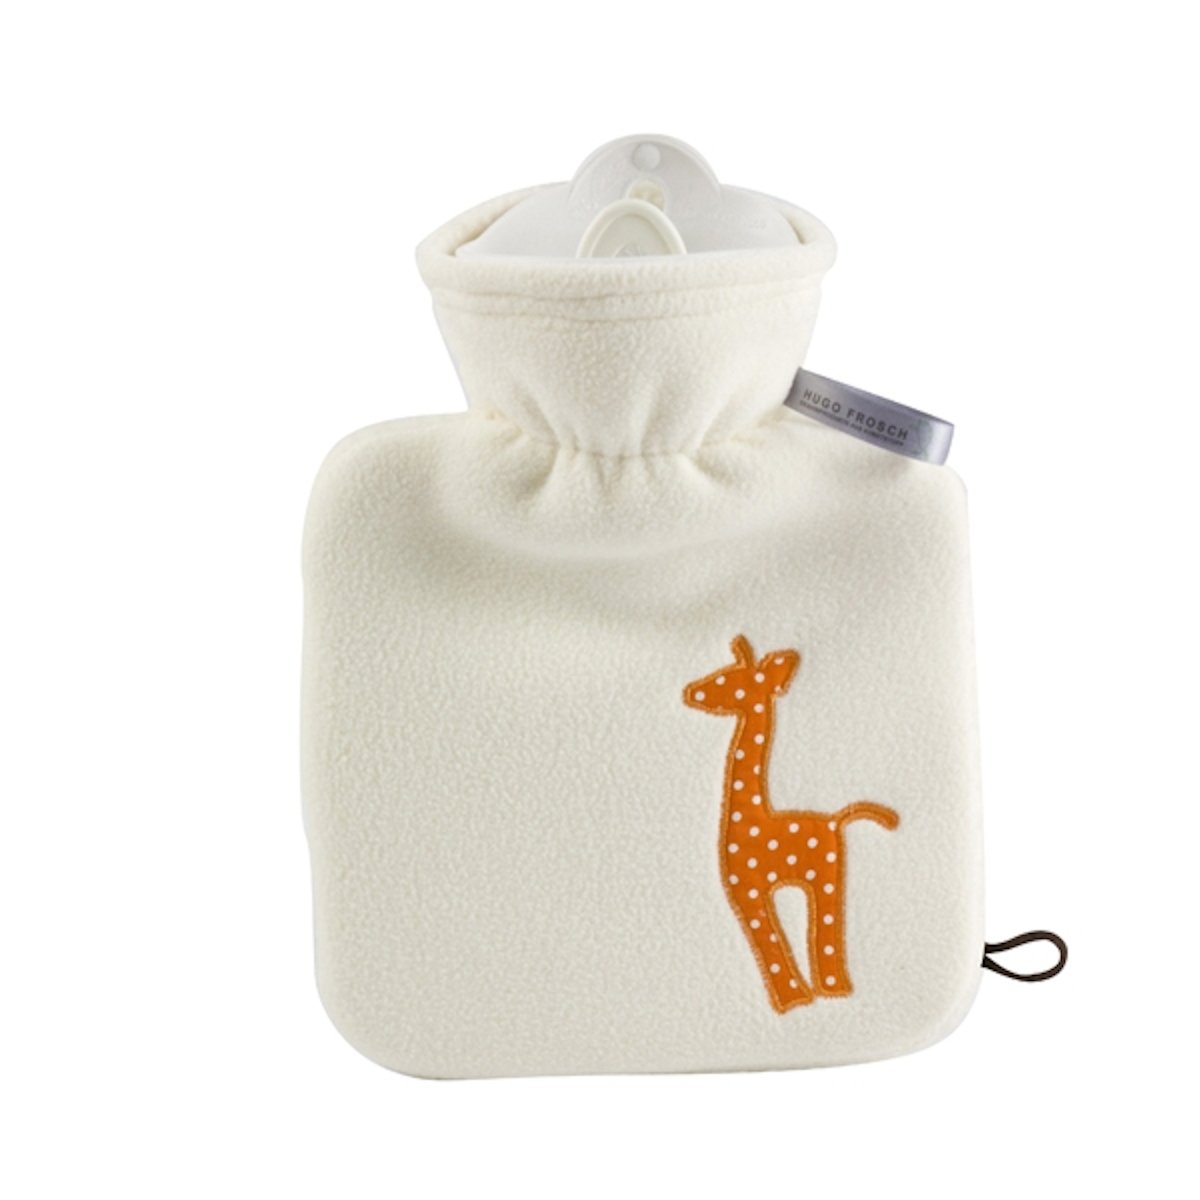 Kids Hot Water Bottle Classic with Cover, Fleece - White Giraffe